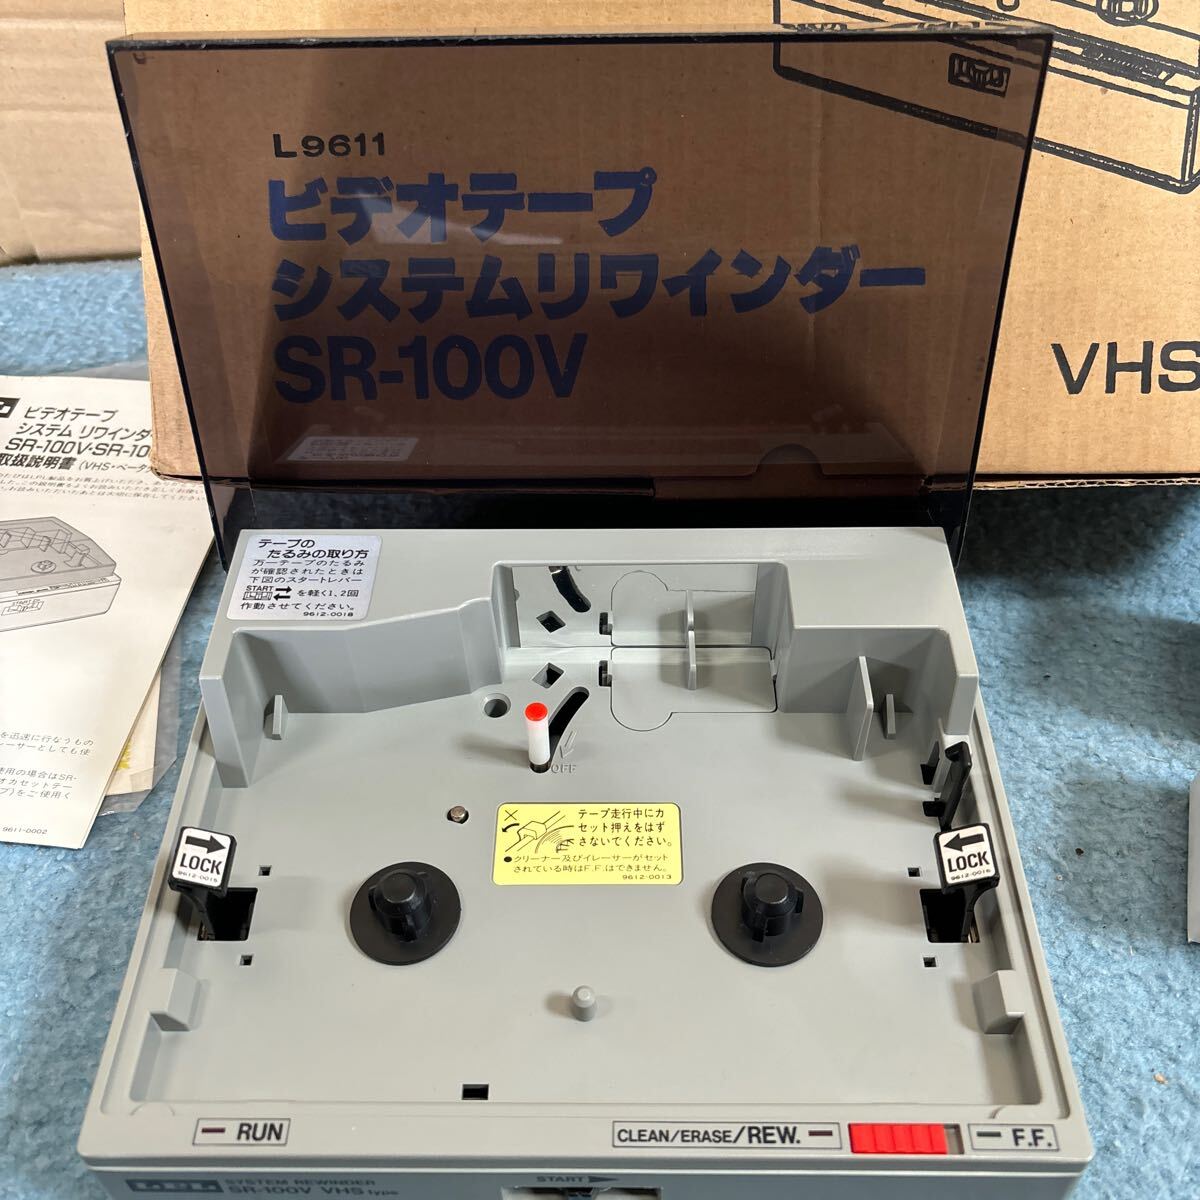 LPL ビデオテープシステムリワインダー SR-100V VHSタイプ ビデオテープ 動作確認済み 昭和レトロ _画像3